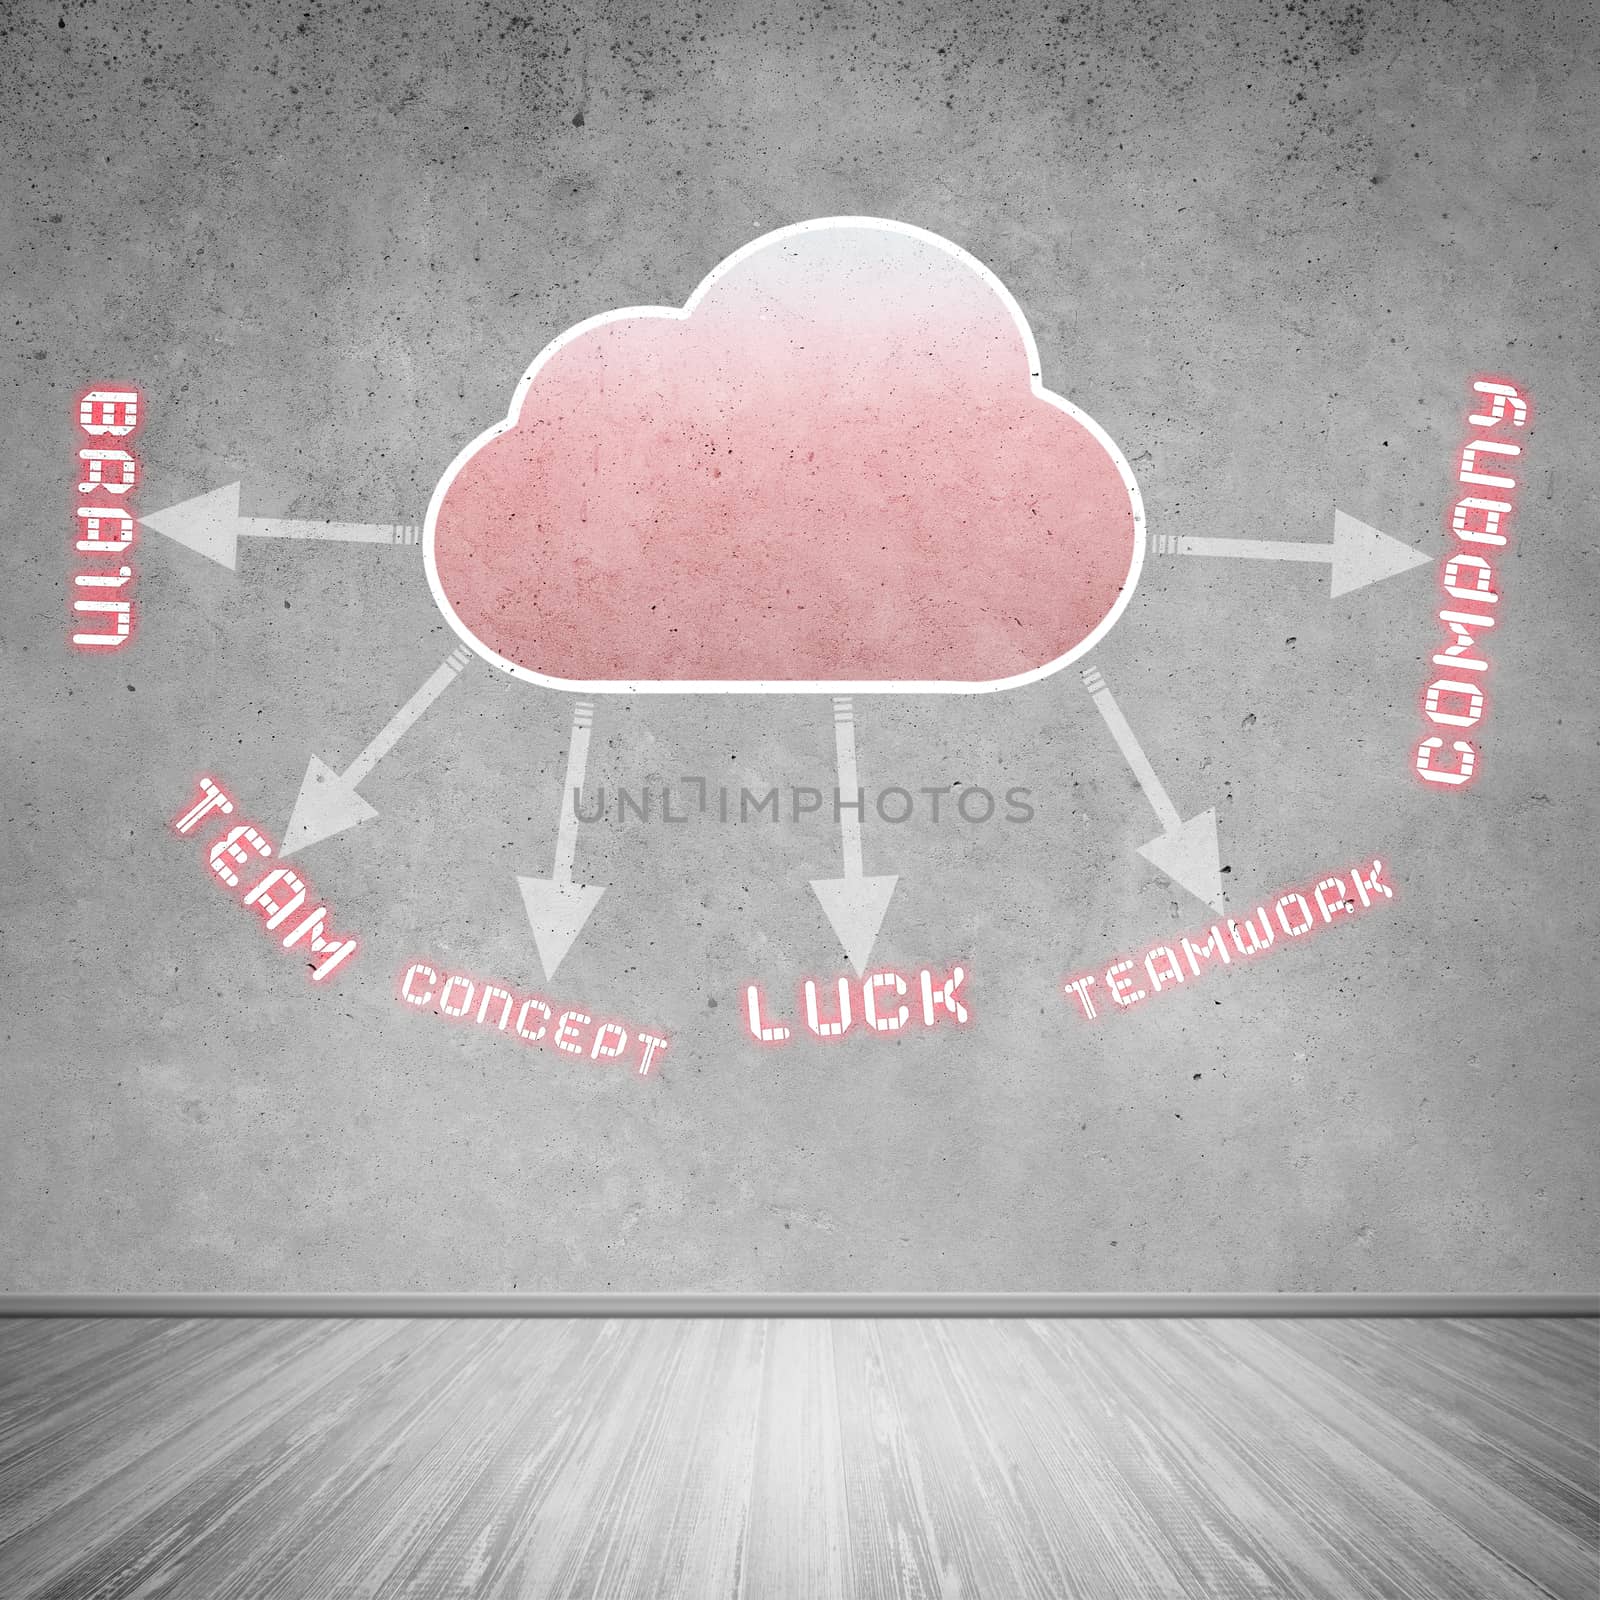 Computing cloud by adam121